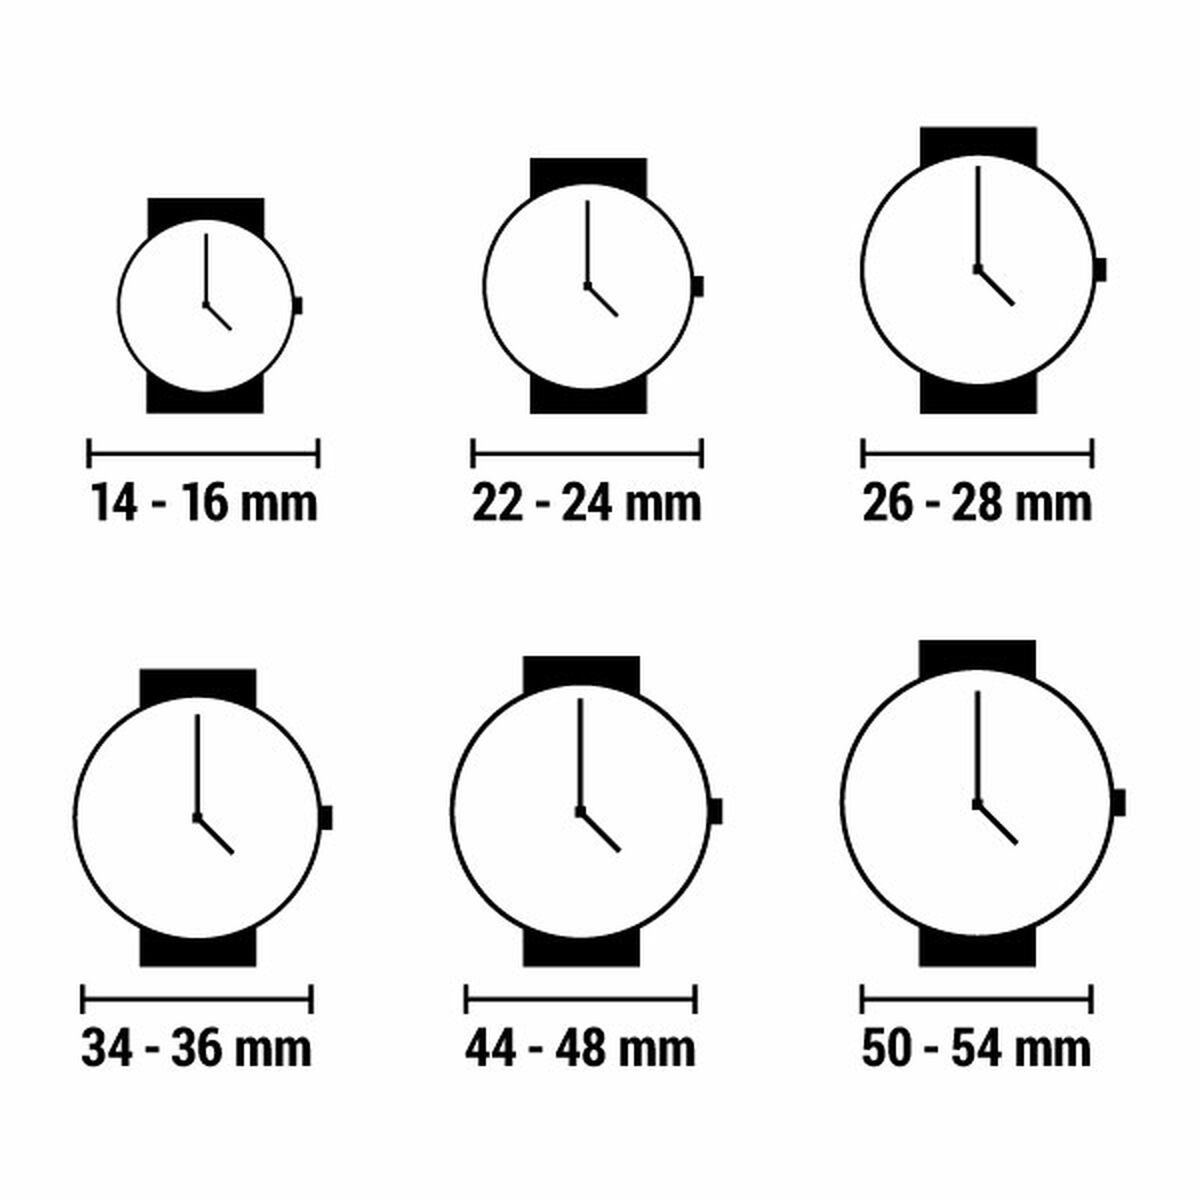 Horloge Dames Olivia Burton OB16BF26 (Ø 30 mm)